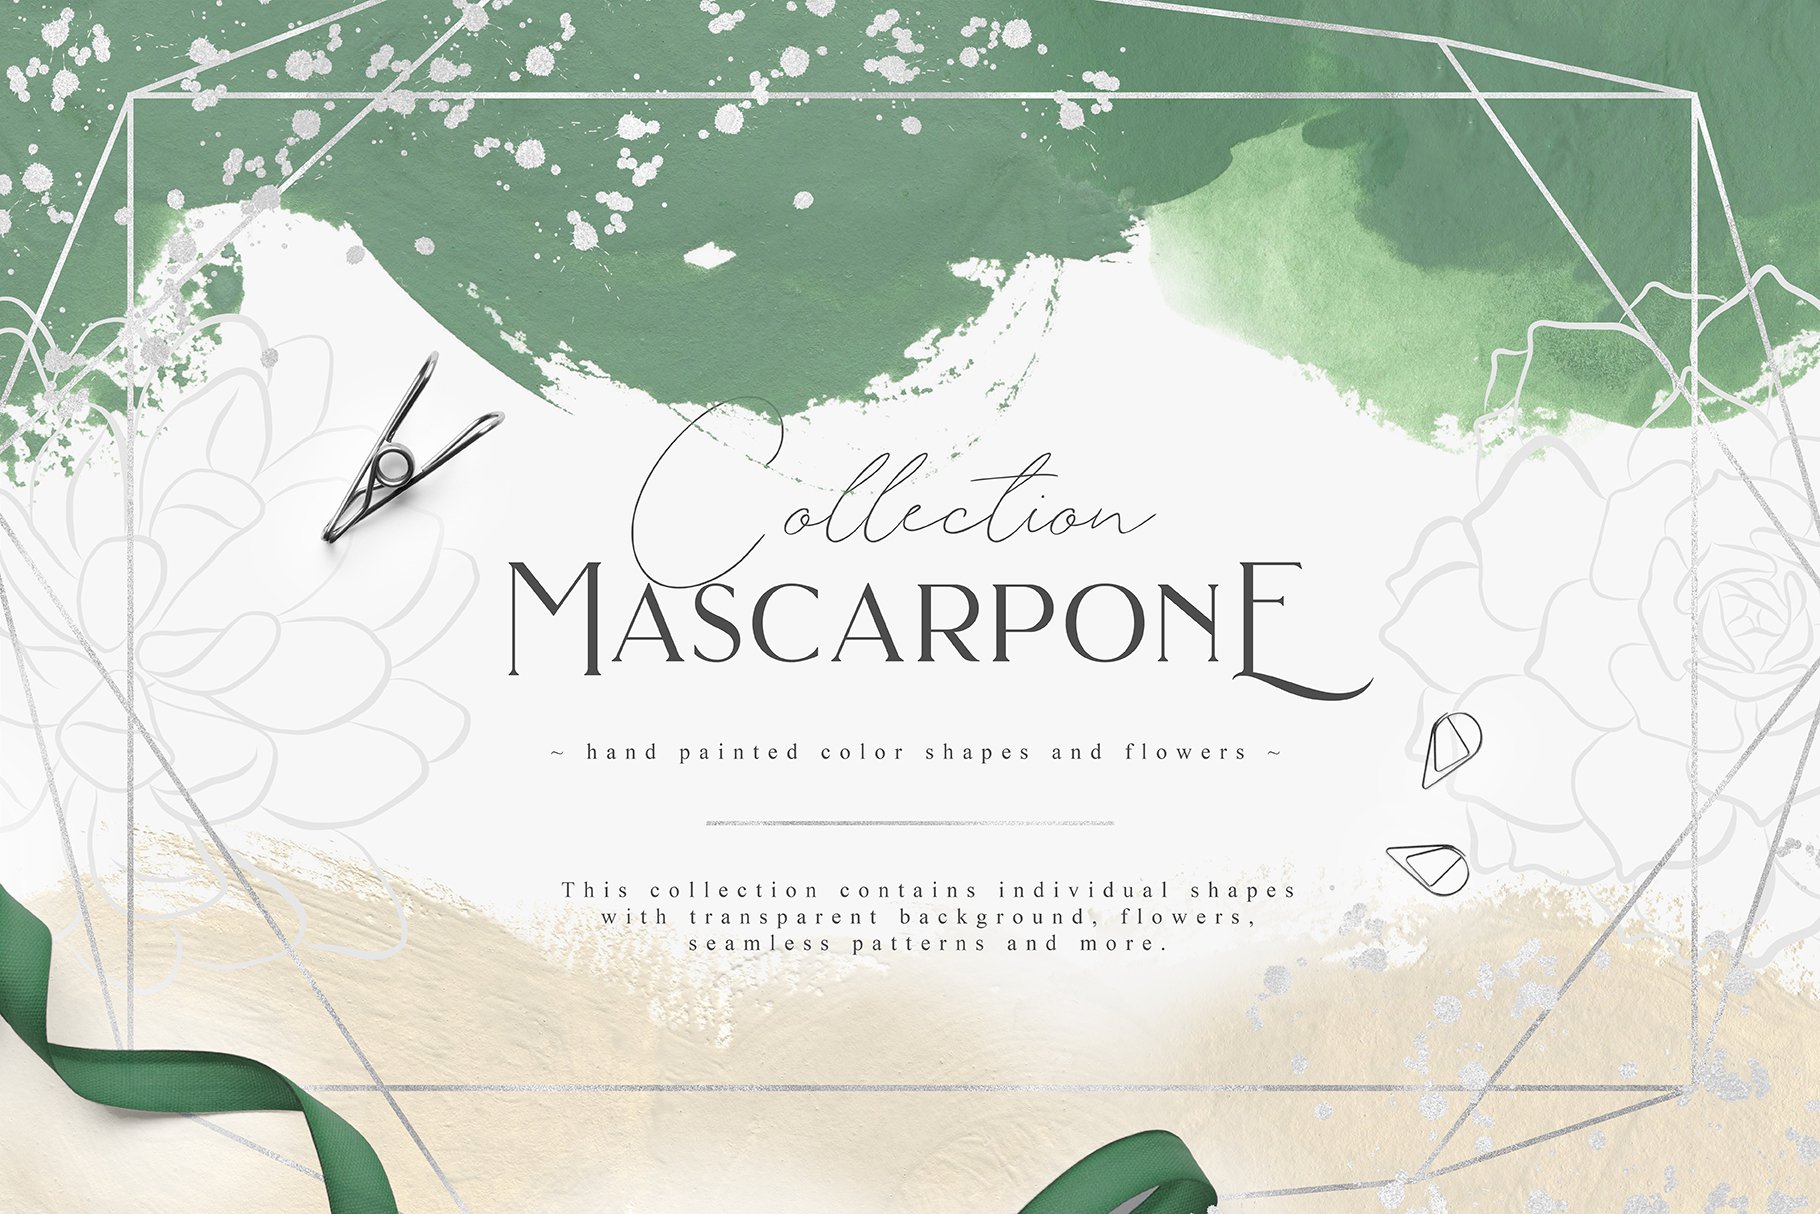 mascarpone-first-image-